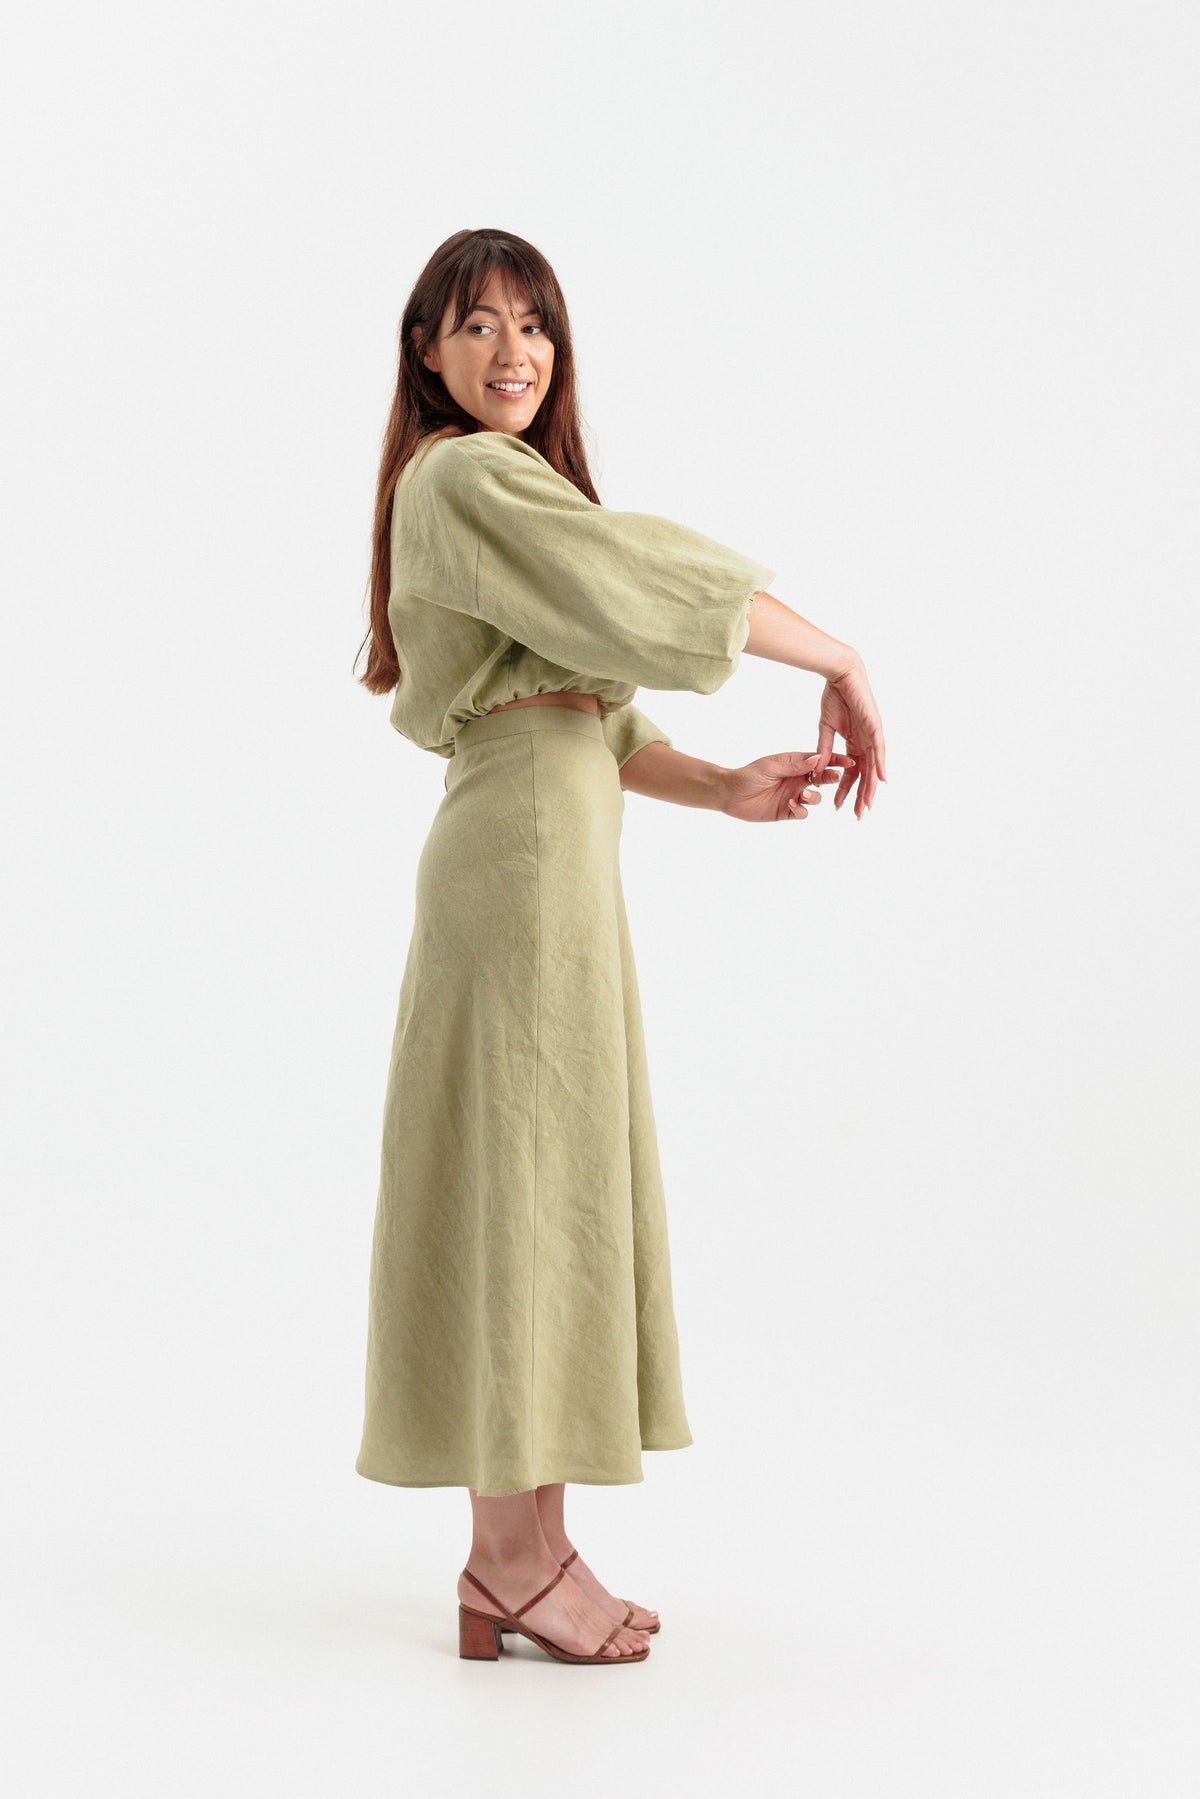 Lulee Dress / Skirt